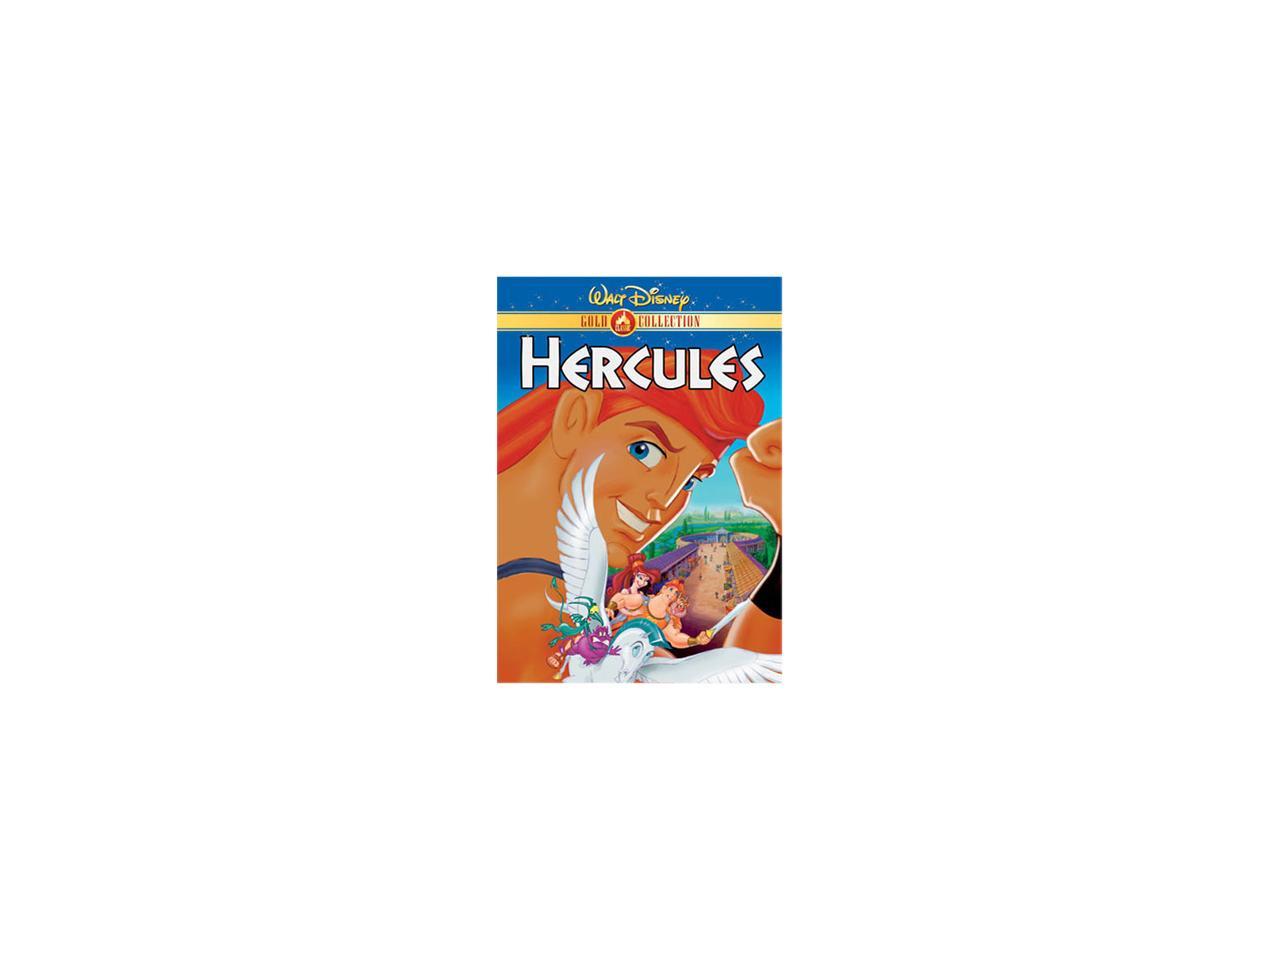 Hercules Disney Gold Classic Collection Dvd 166 Dd 51 Fr Sp Sub 